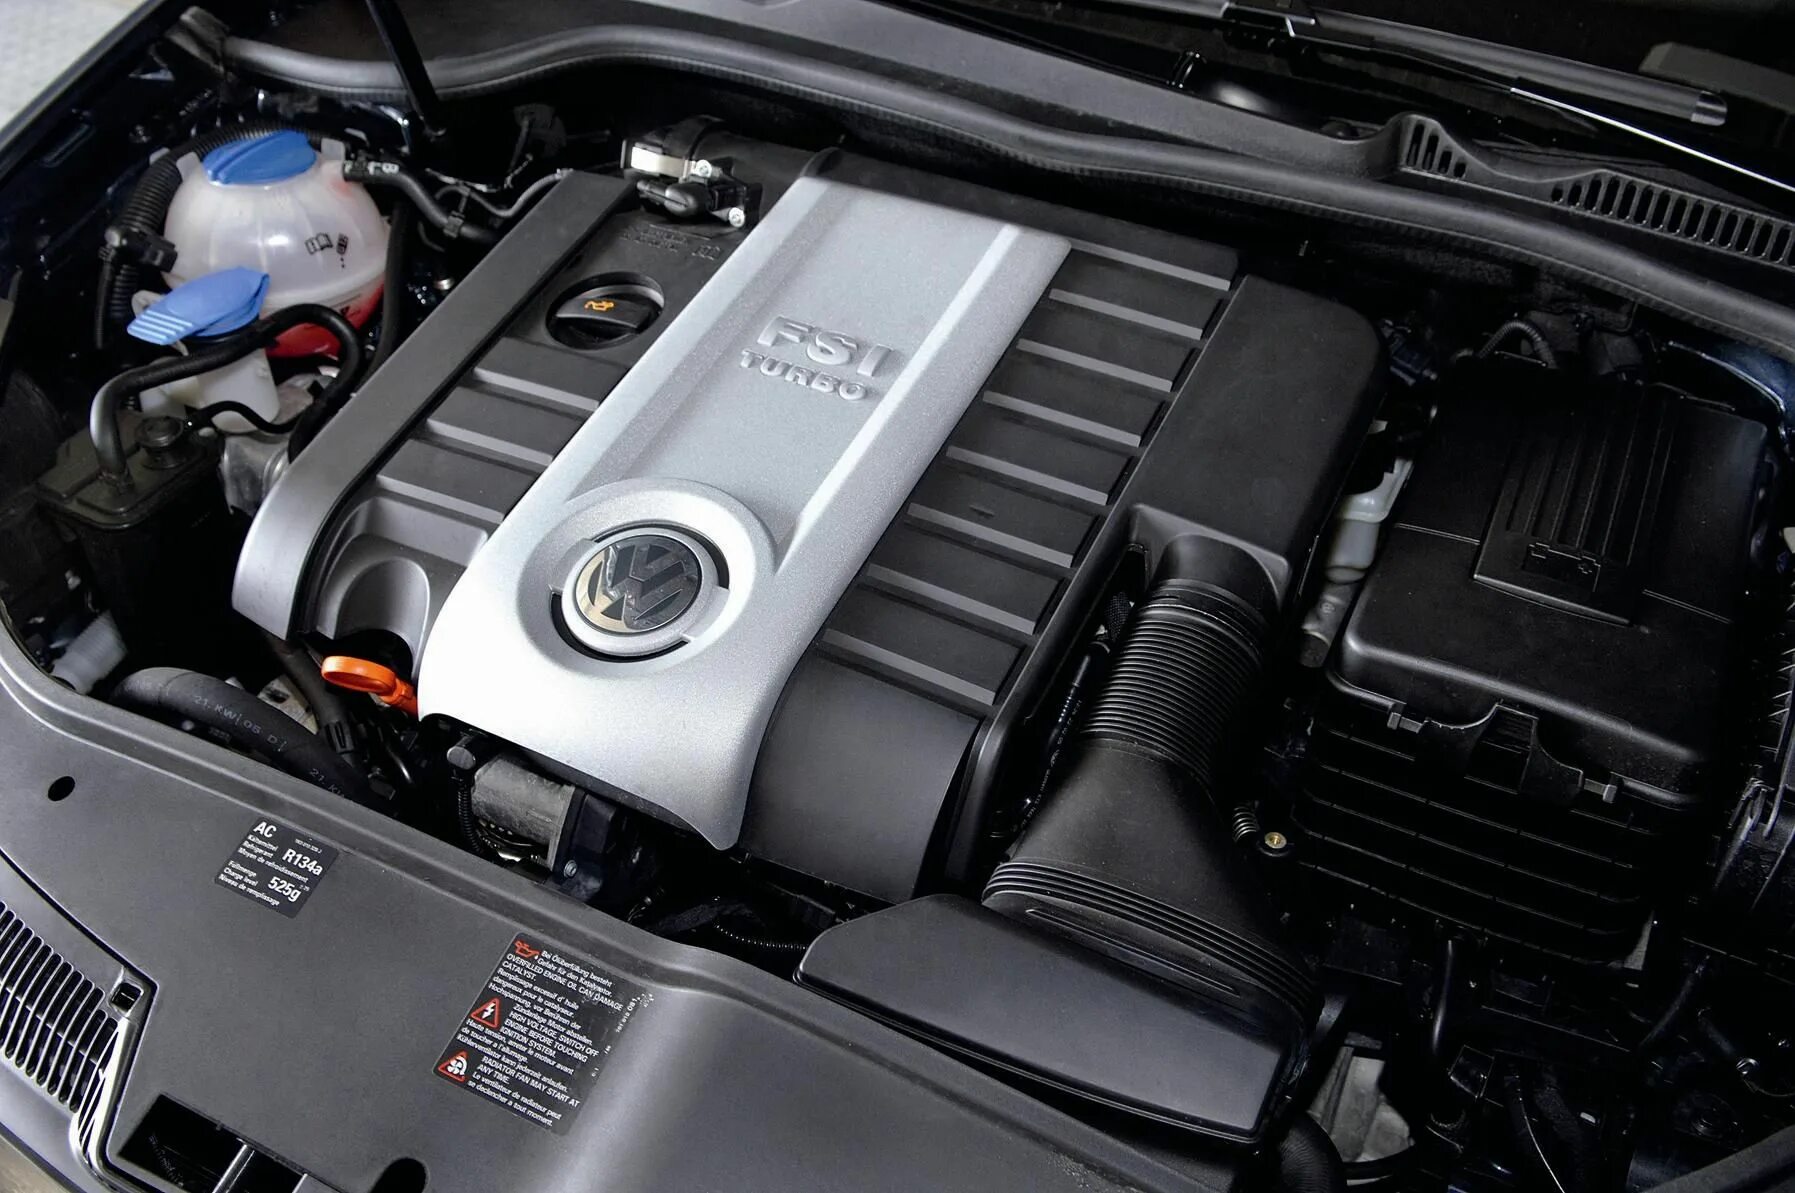 Масло пассат б6 2.0 fsi. Двигатель Volkswagen Jetta b 6. Двигатель Пассат б6 2.0. Volkswagen Jetta 4 2.0 двигатель. Фольксваген Пассат б6 2 л FSI.